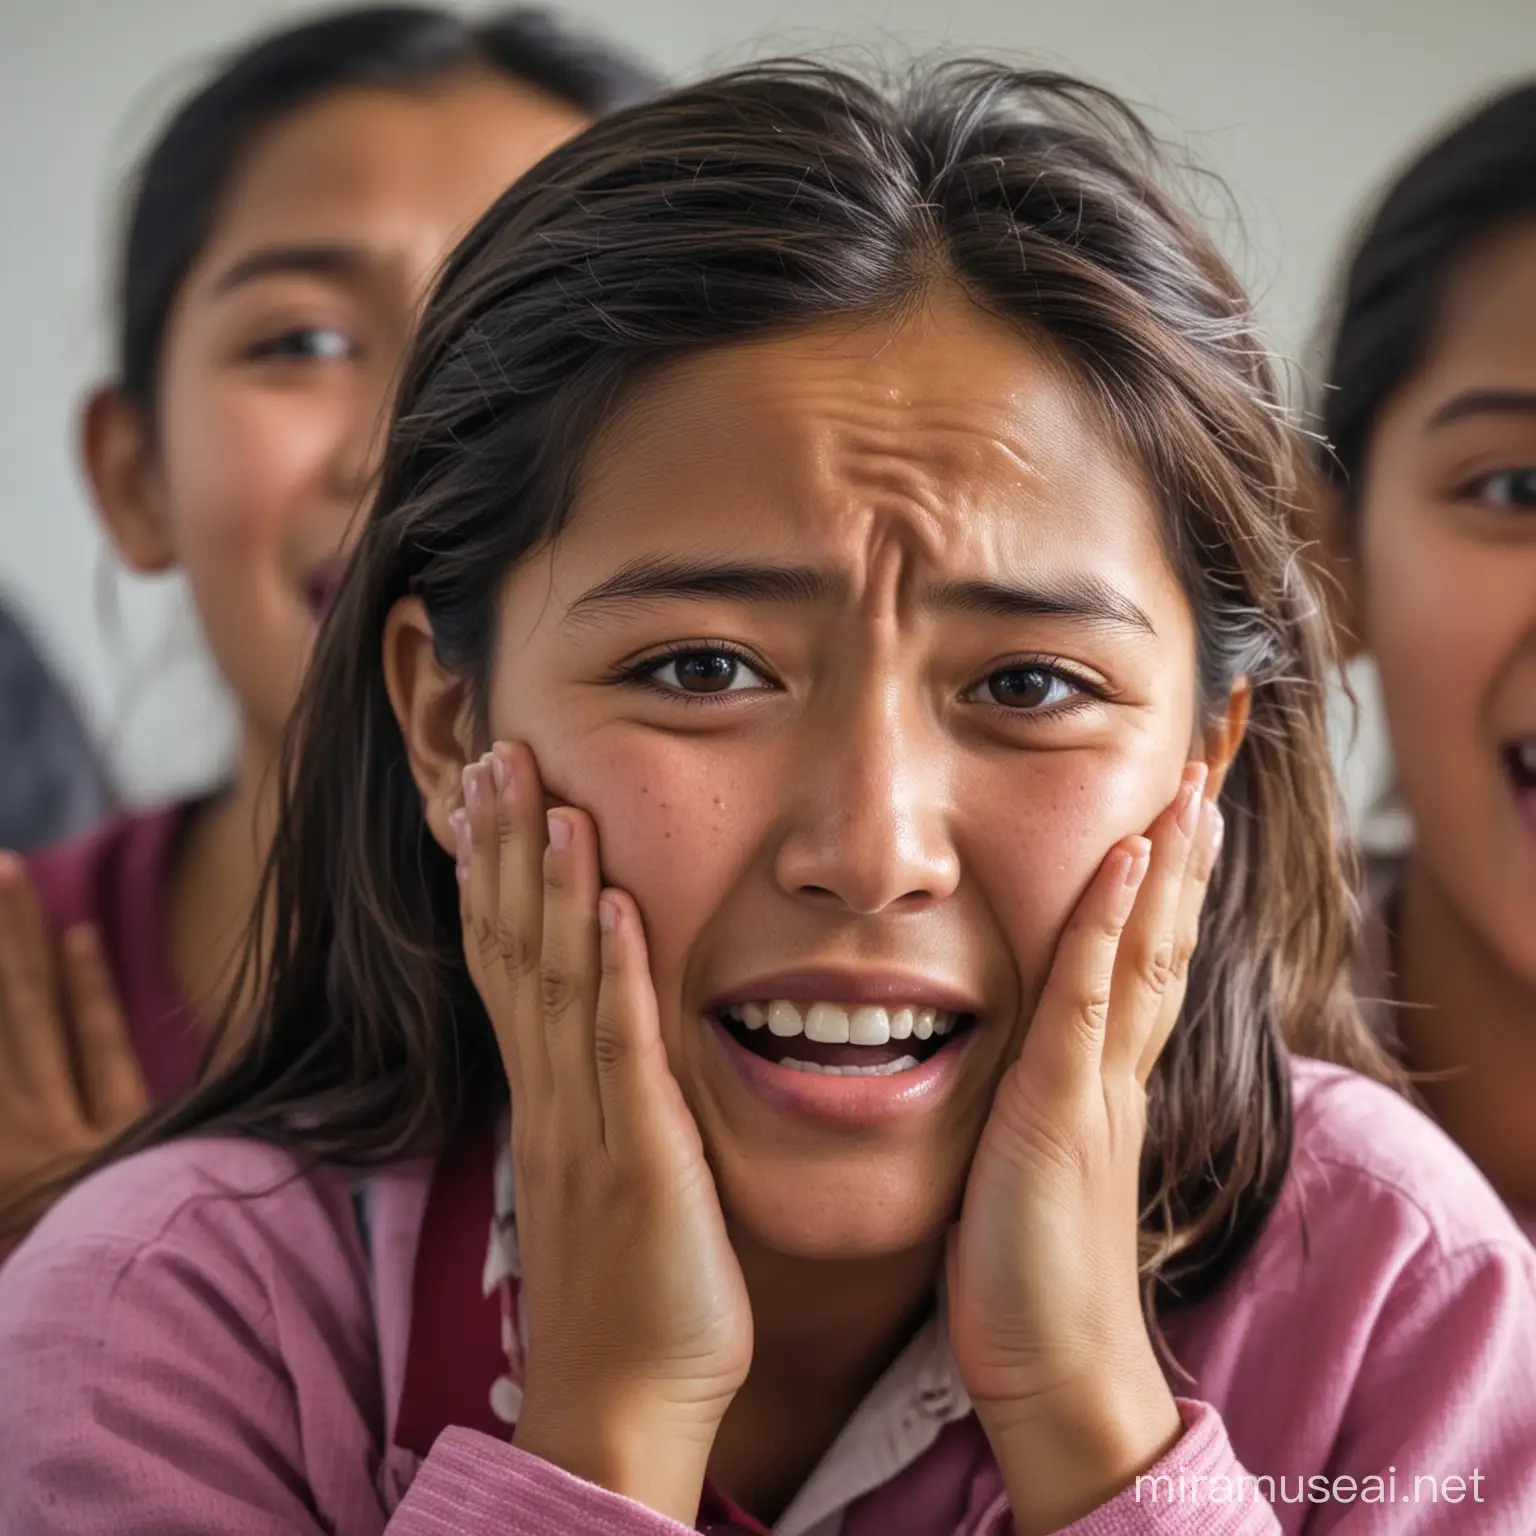 Nepali Schoolgirl Crying in Pain from Dental Emergency